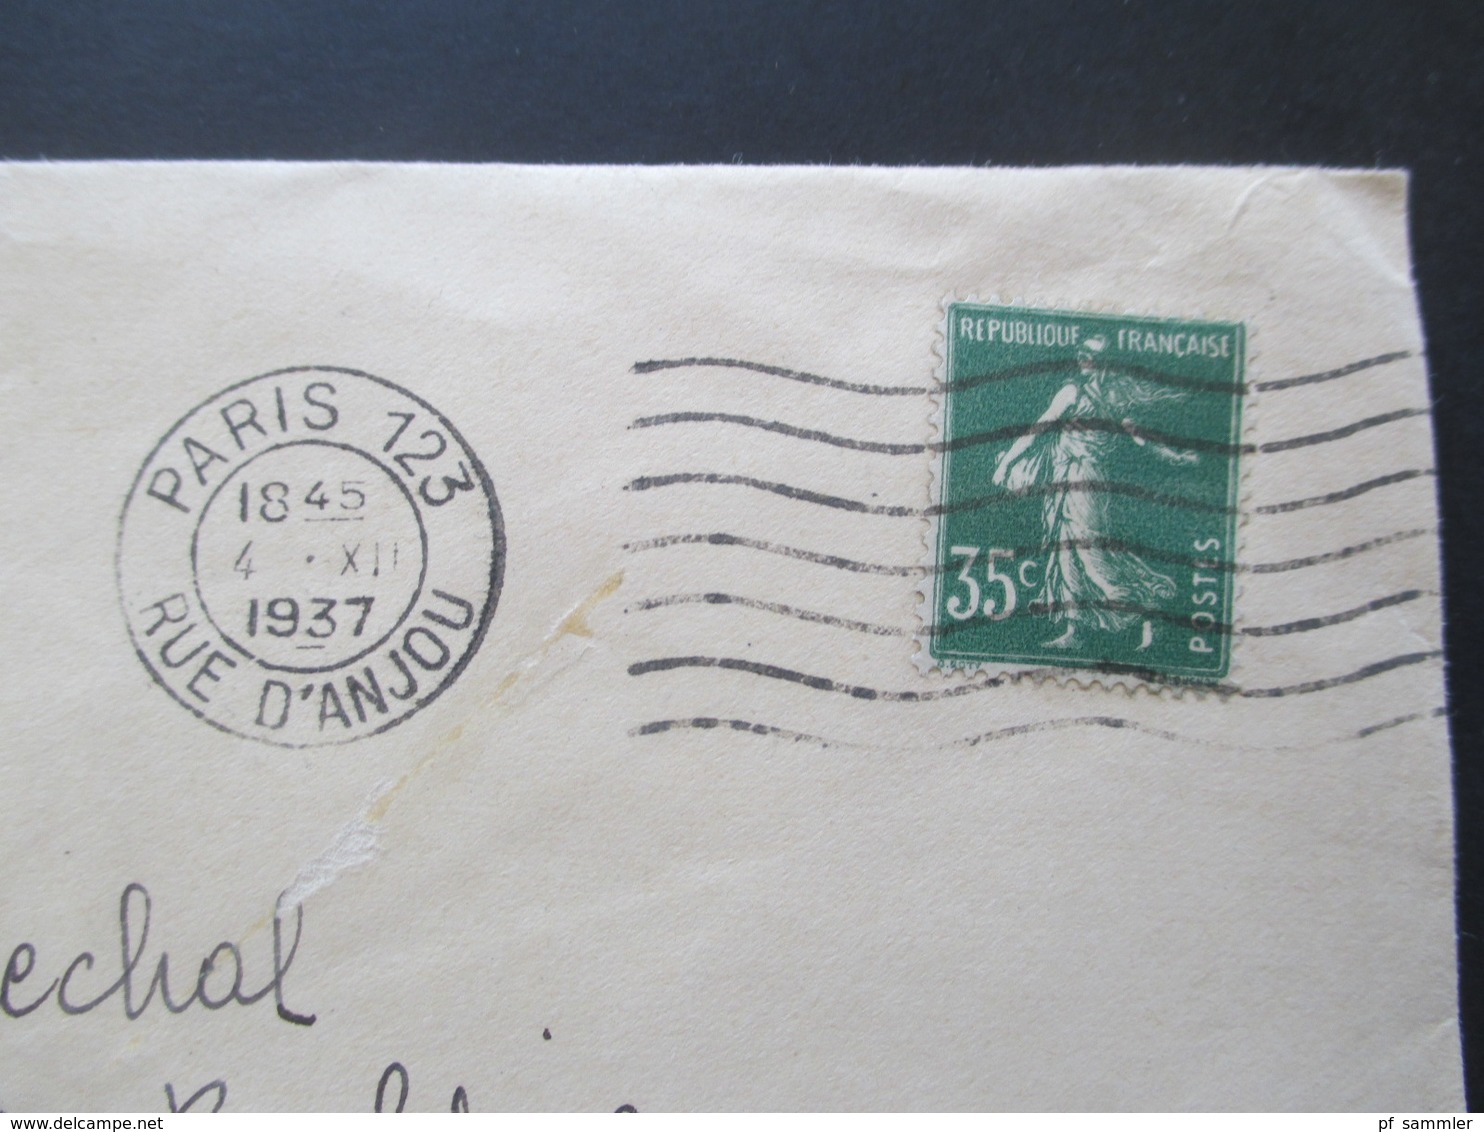 Frankreich 1937 Säerin EF Brief Aus Paris Nach Dayton Ohio Umschlag Des Hotel De Crillon 10, Place De La Concorde Paris - Briefe U. Dokumente